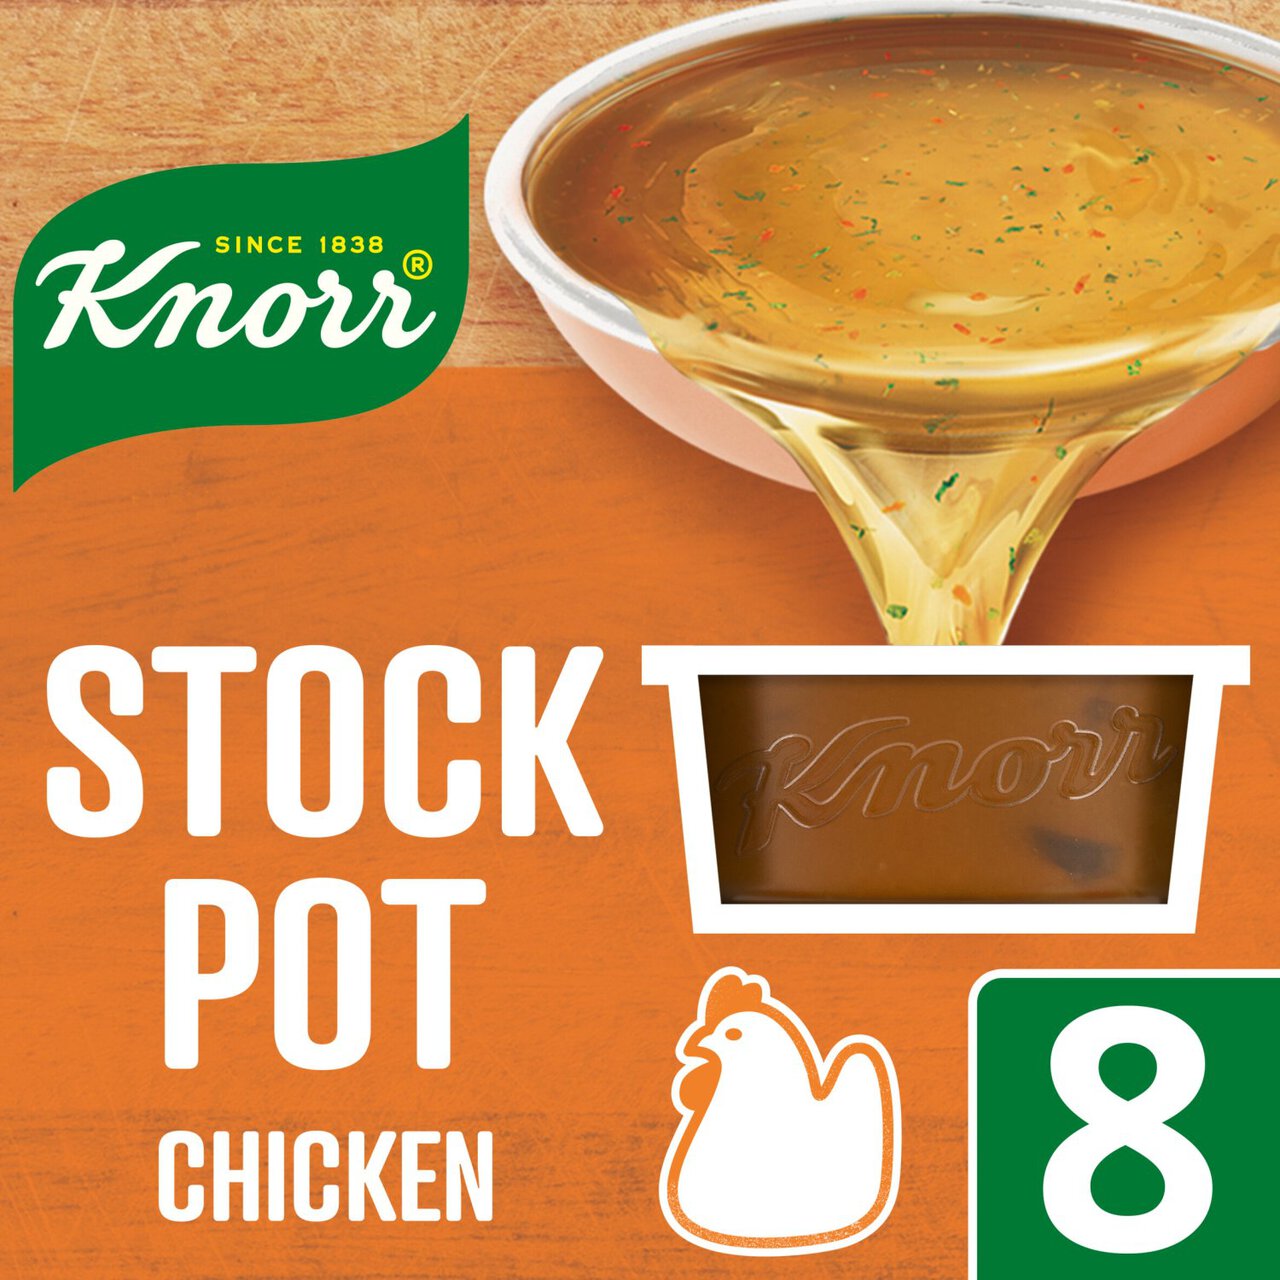 Knorr 8 Chicken Stock Pot 8 x 28g